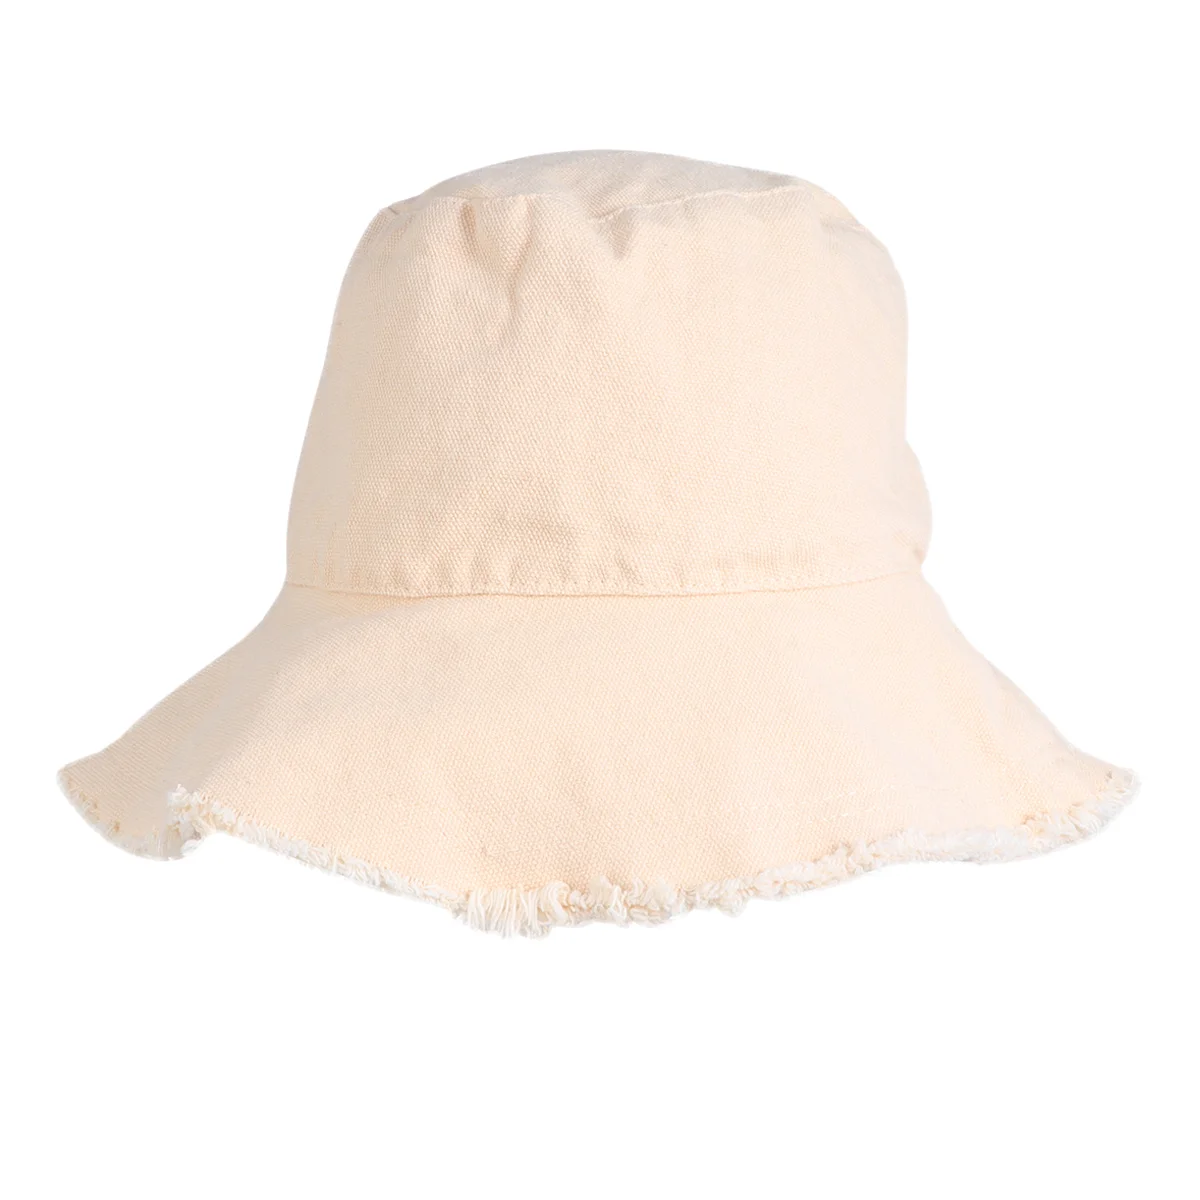 Солнцезащитная шляпа, складная панама с защитой от ультрафиолета, однотонная рыбацкая шляпа для улицы